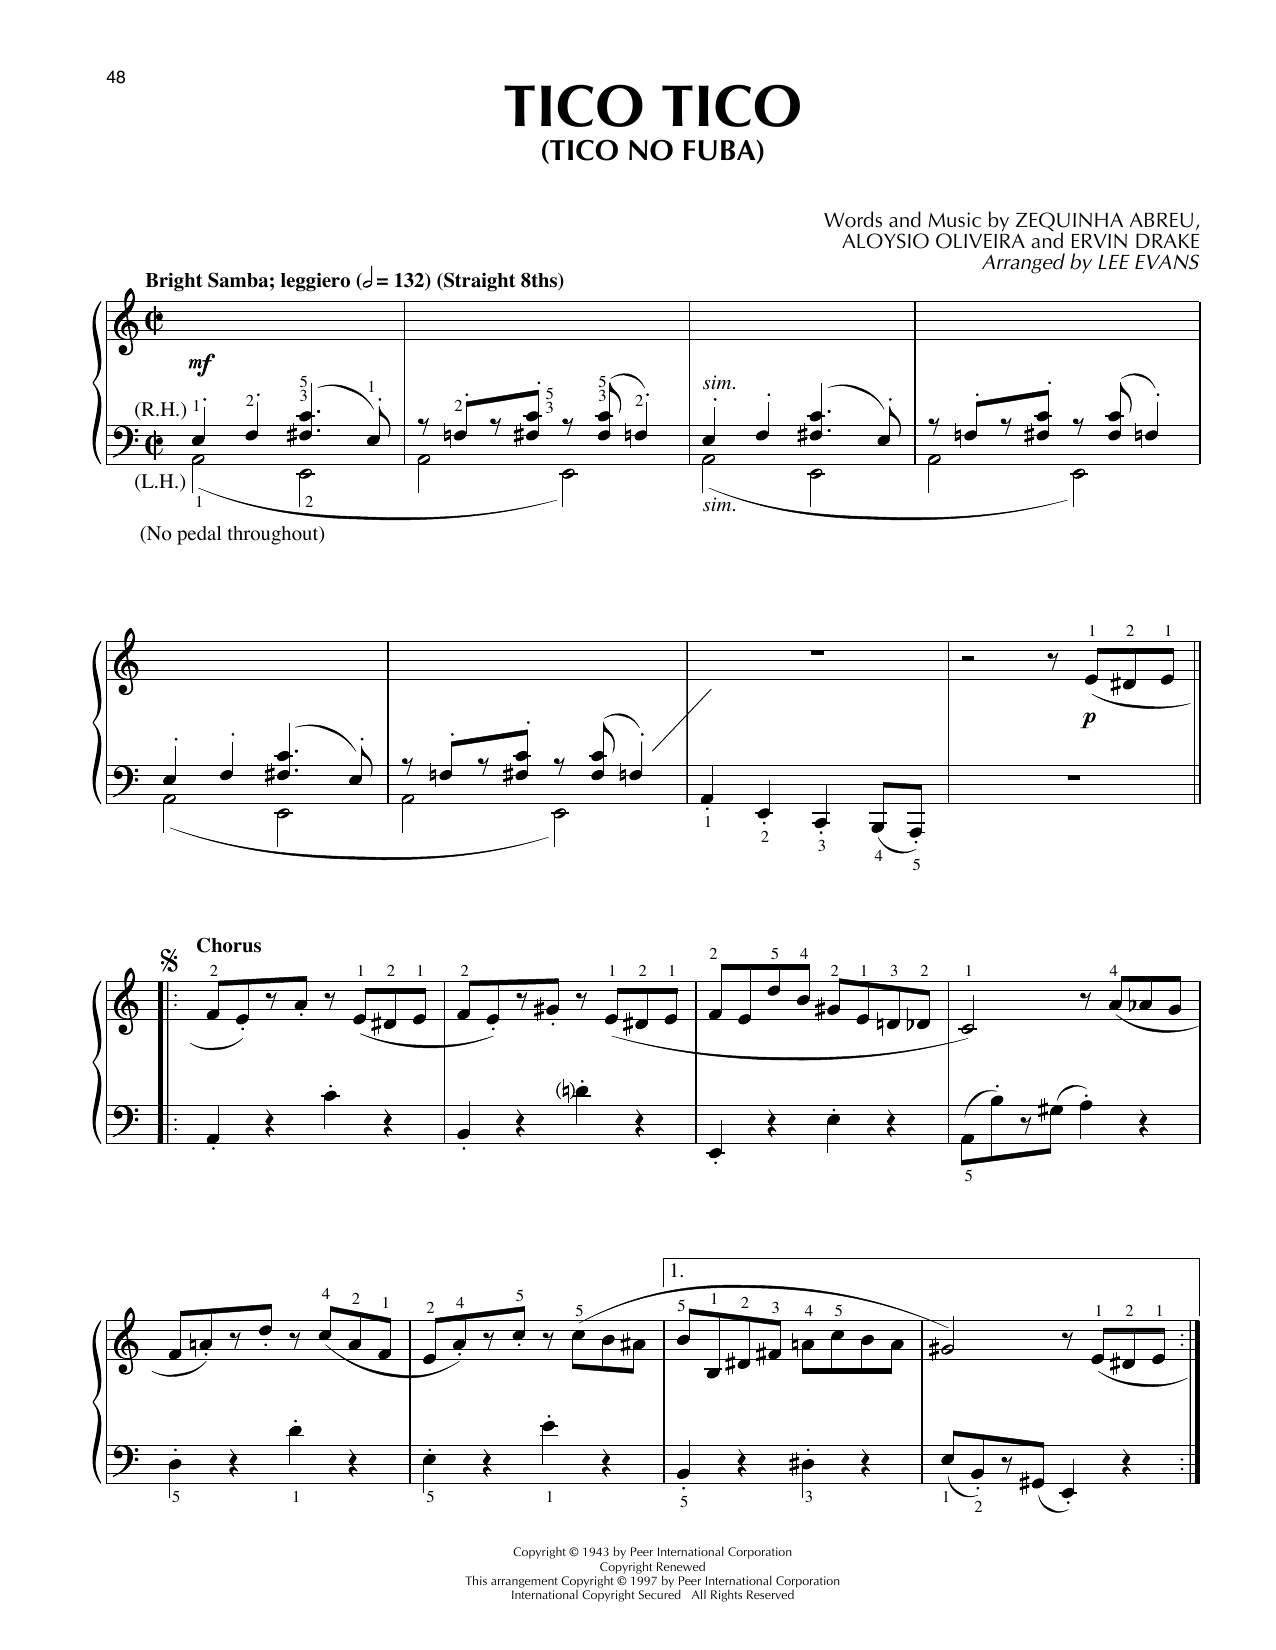 Lee Evans Tico Tico (Tico Tico No Fuba) Sheet Music Notes & Chords for Piano Solo - Download or Print PDF